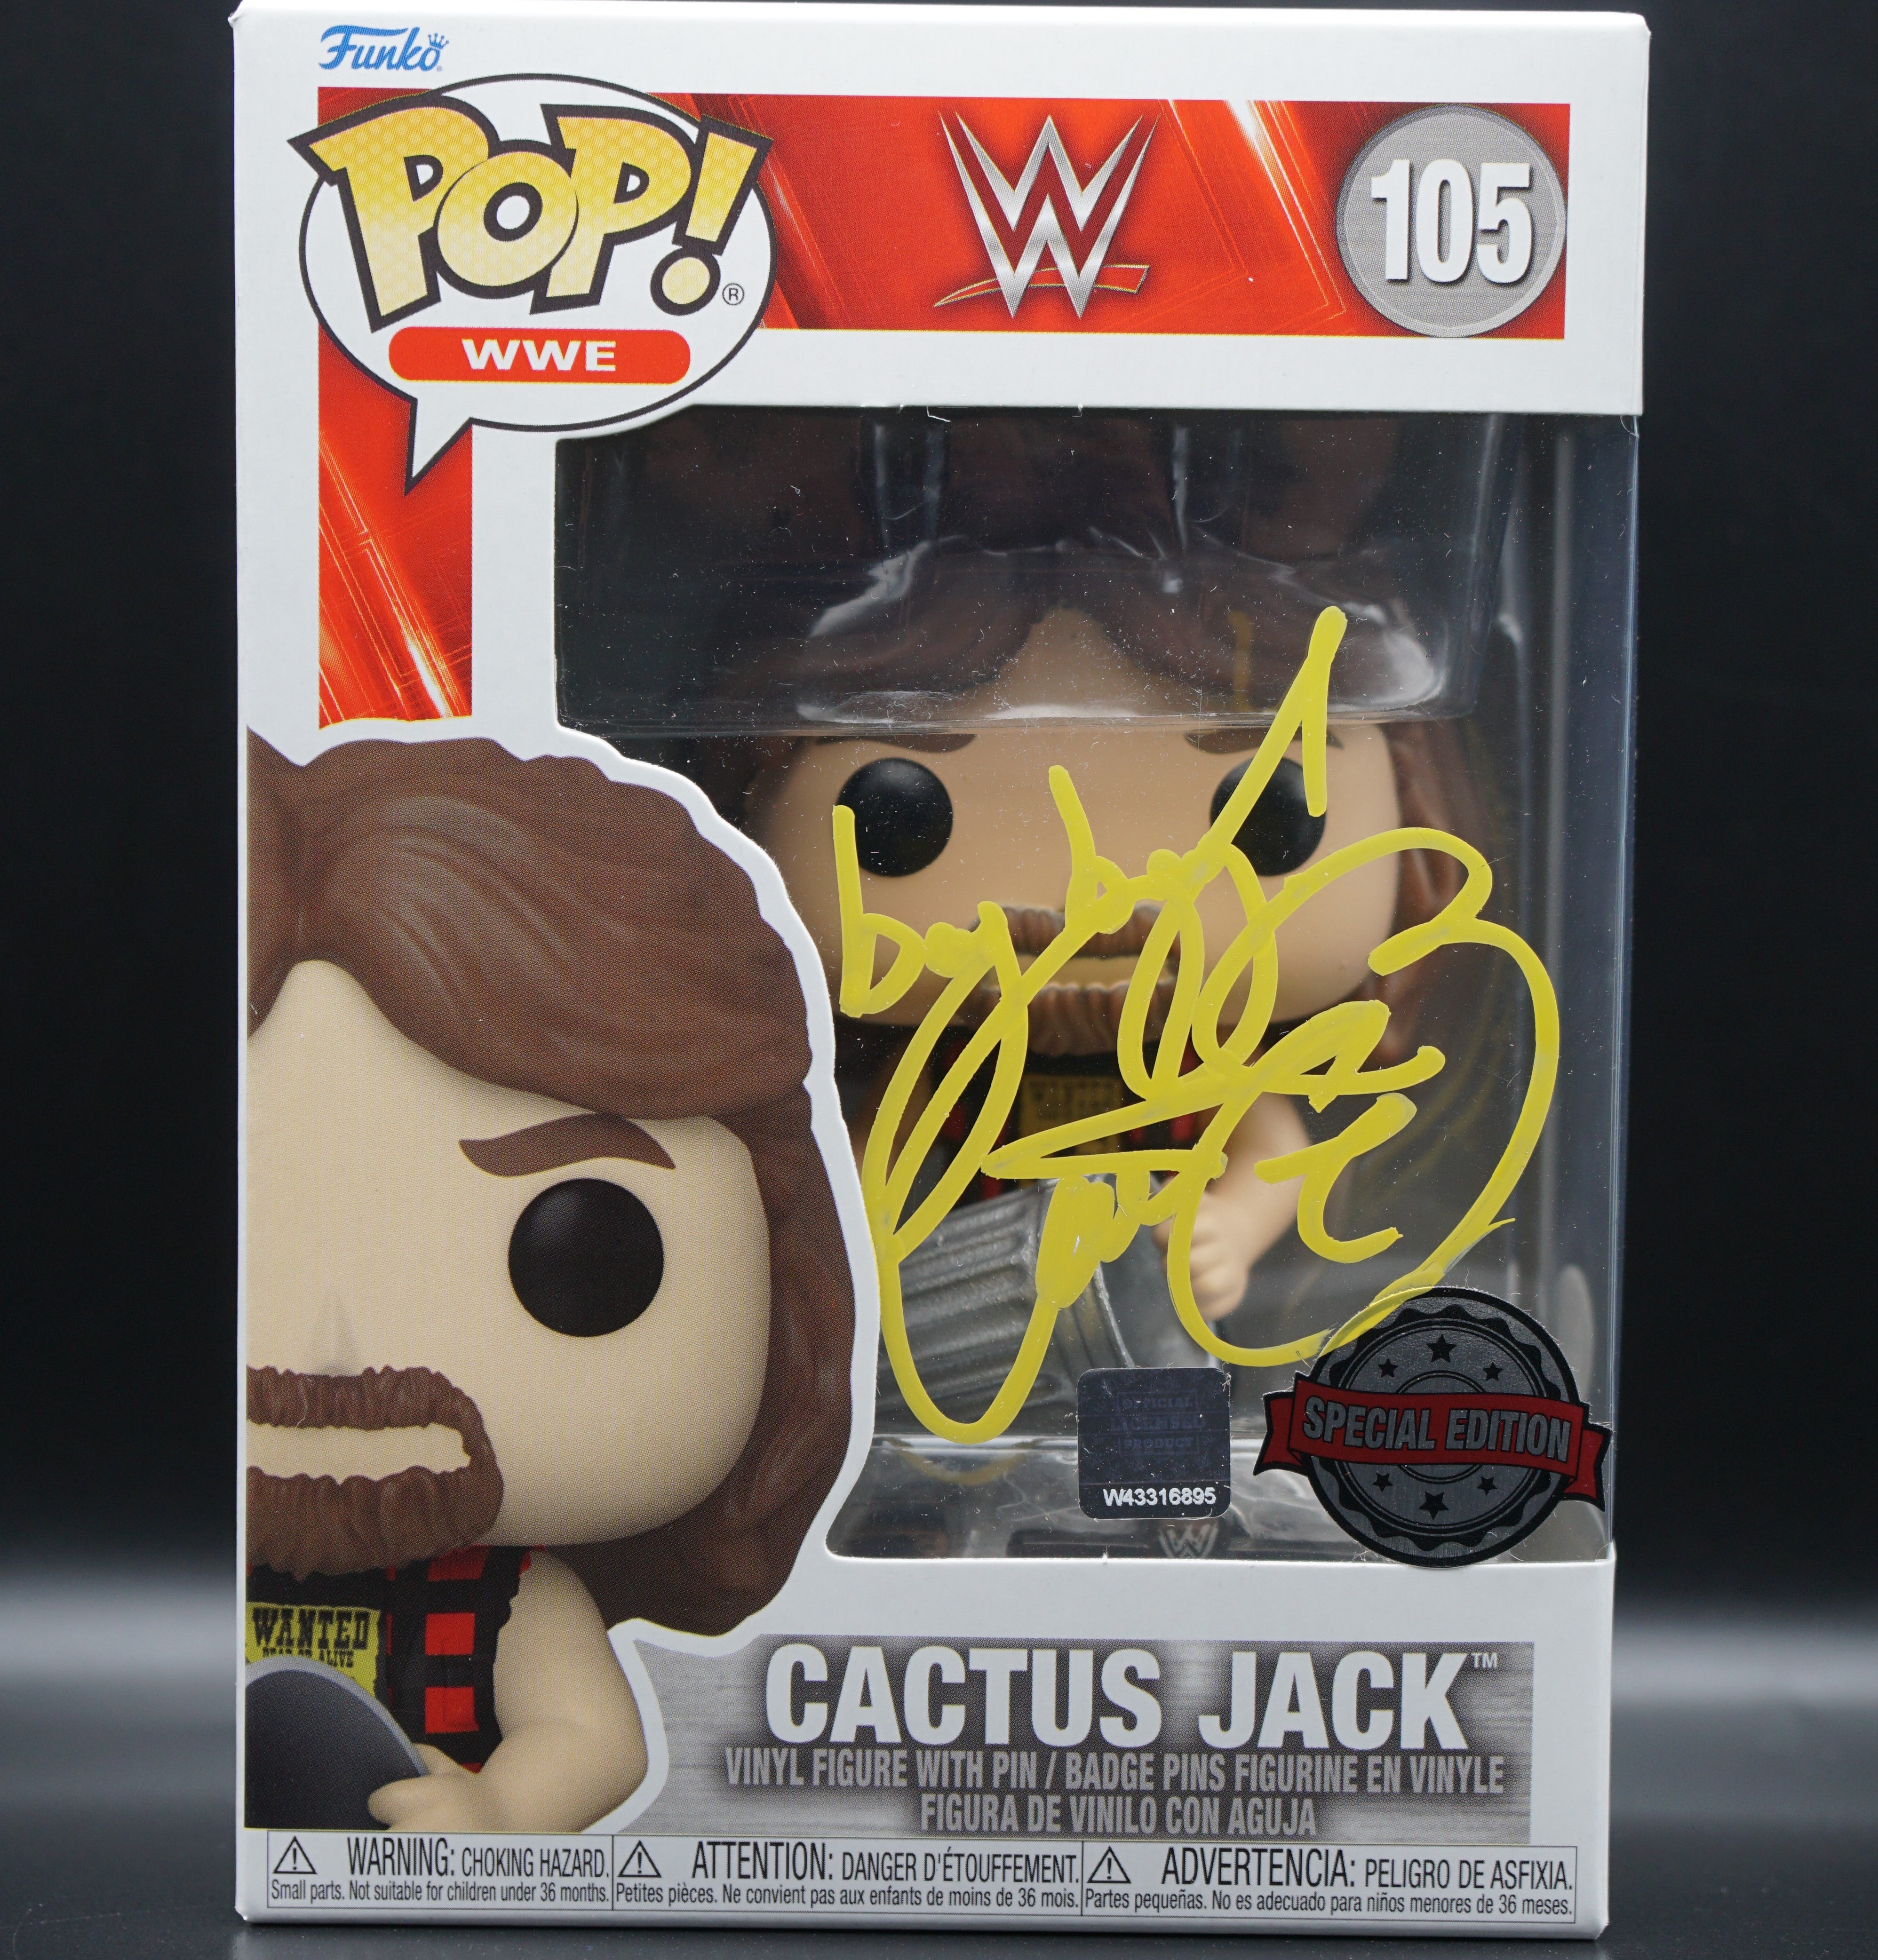 WWE Cactus Jack Funko Pop #105 GameStop Exclusive PSA COA Inscription "Bang Bang" - Signed by Mick Foley as Cactus Jack